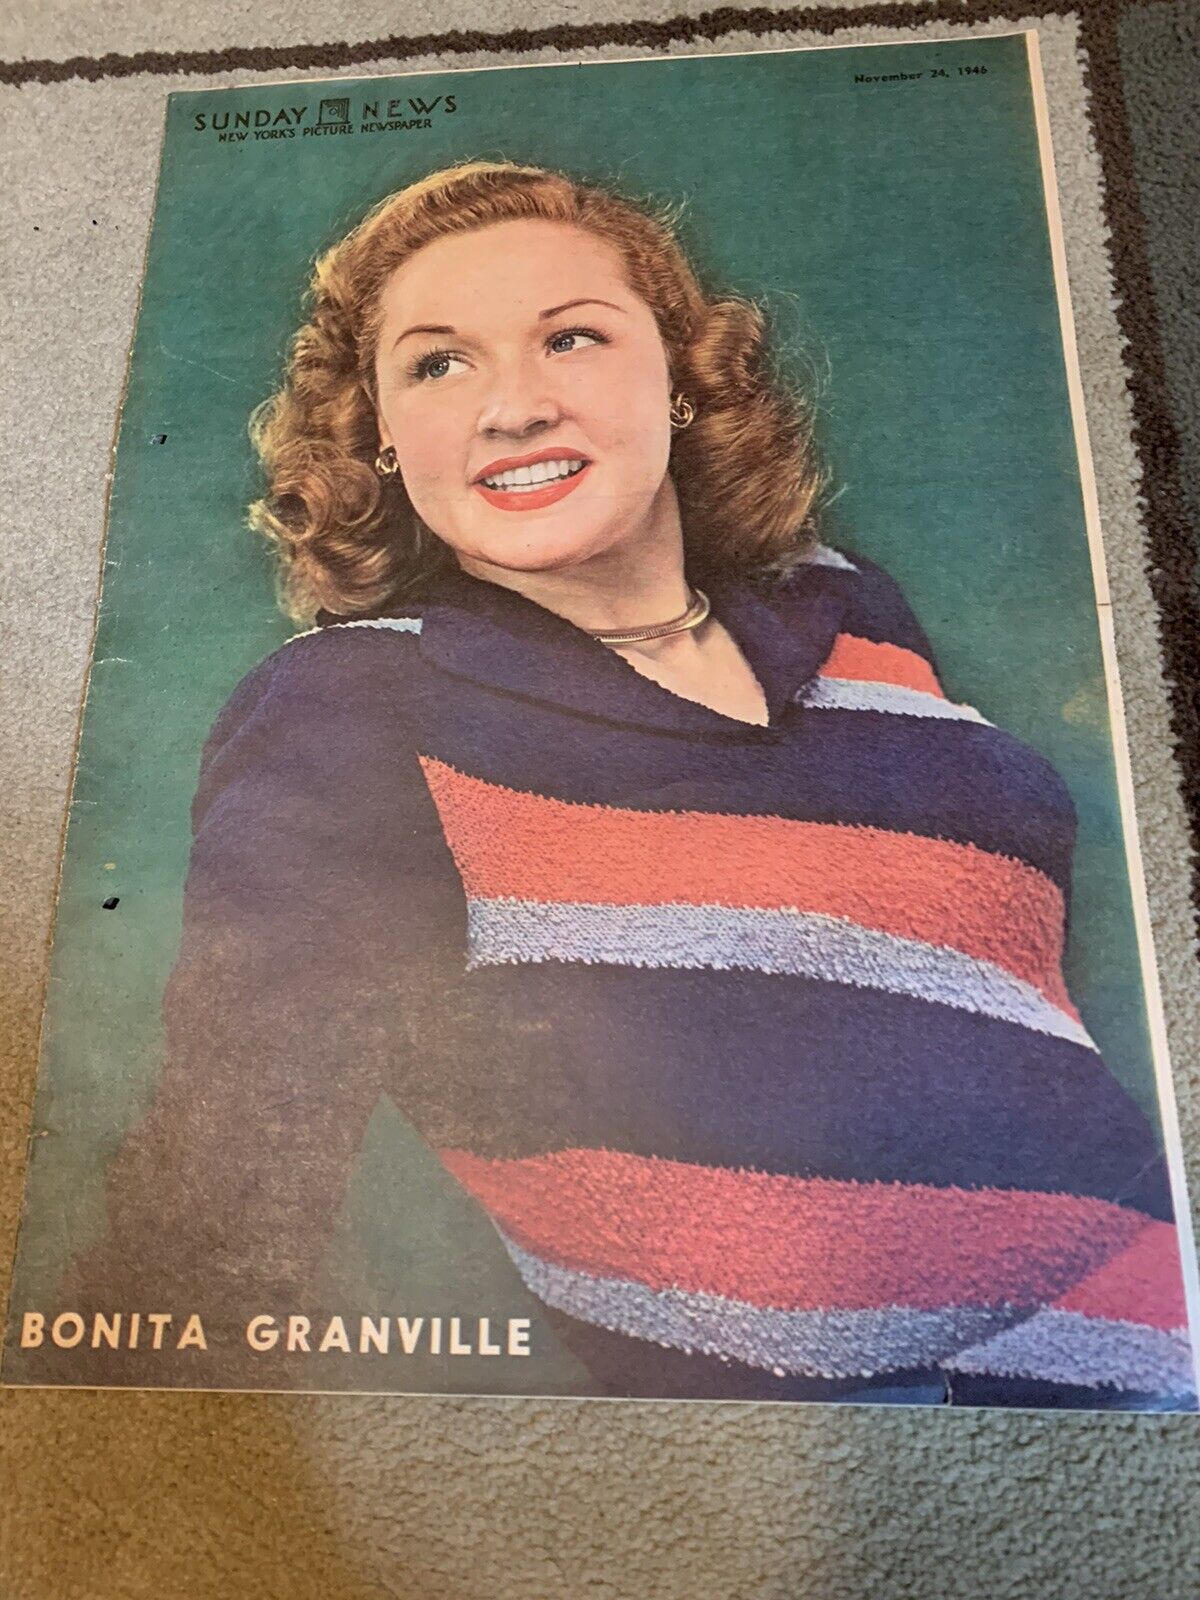 BONITA GRANVILLE original color portrait SUNDAY NEWS 11/24/46 NANCY DREW RARE